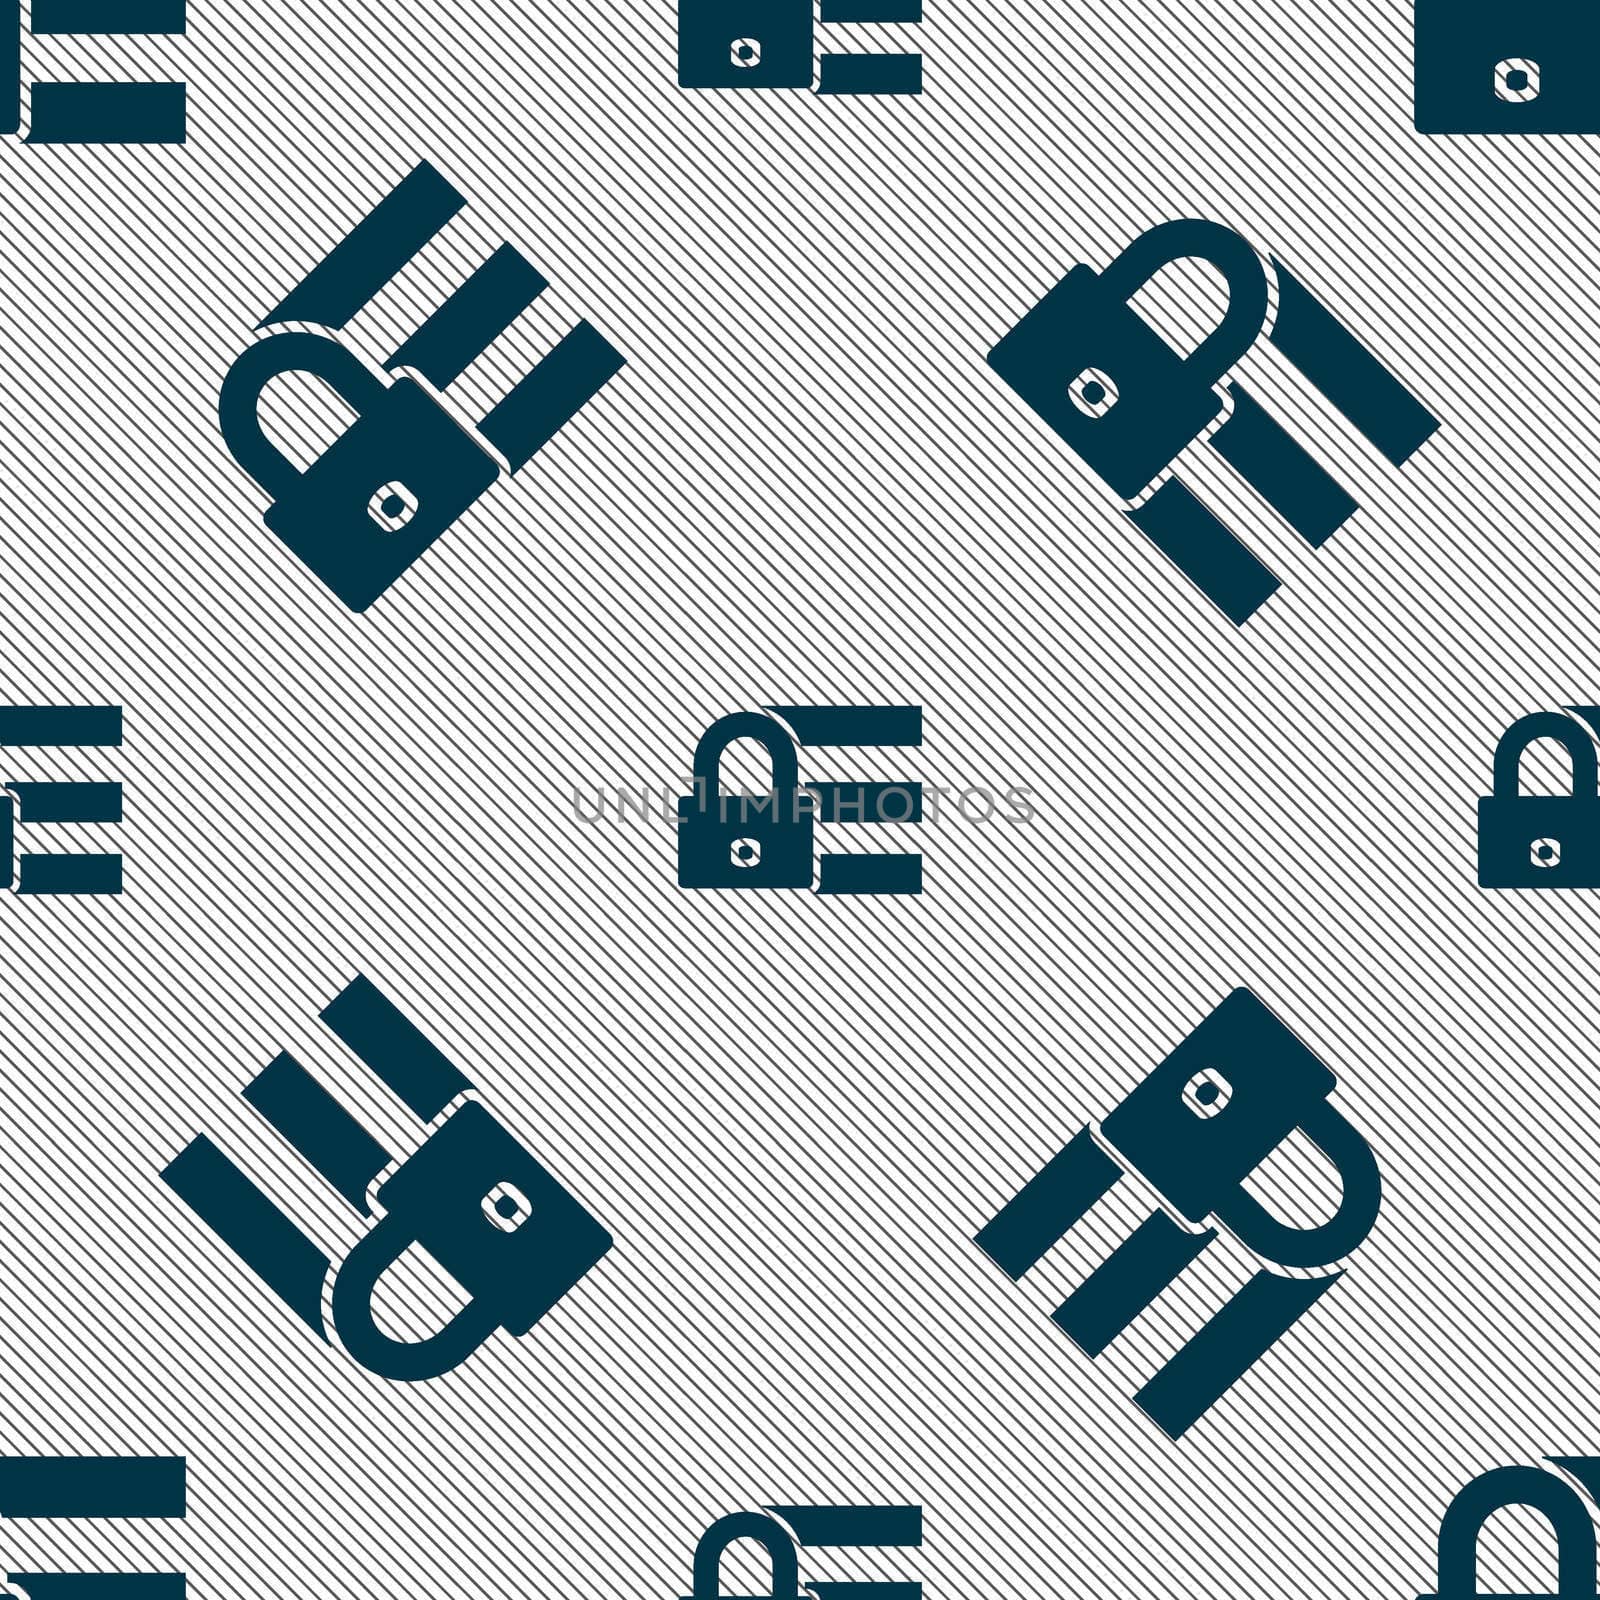 Lock, login icon sign. Seamless pattern with geometric texture. illustration